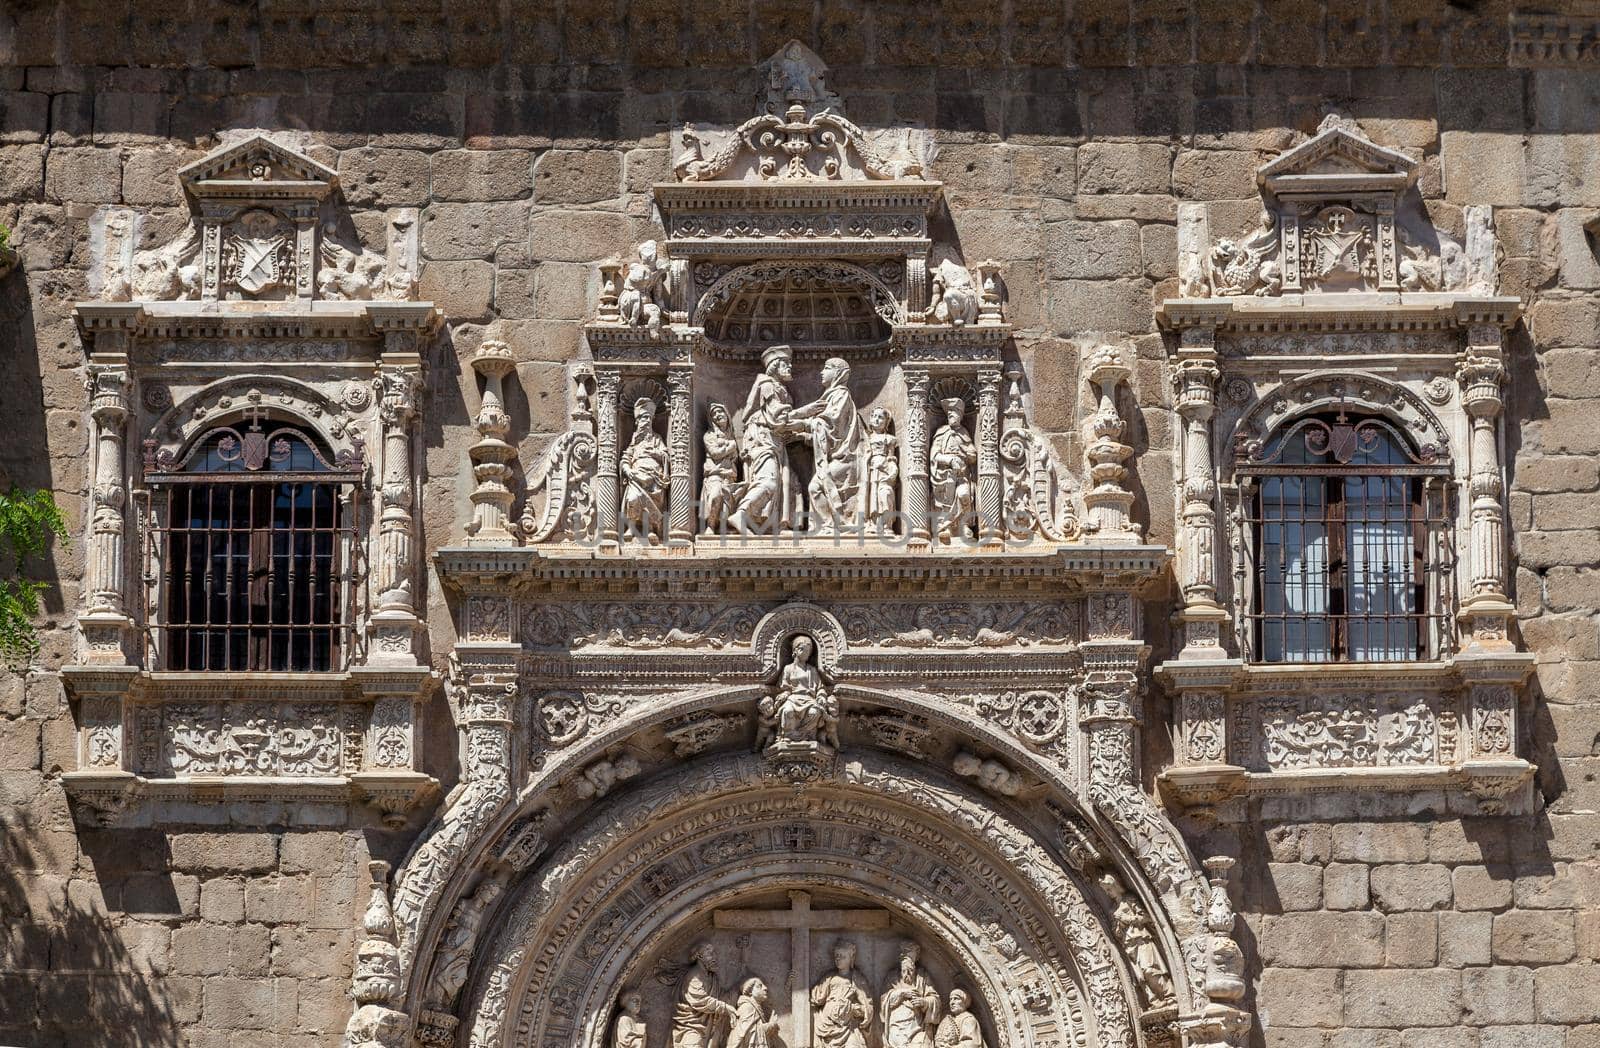 Plateresque facade of Santa Cruz museum in Toledo by Goodday